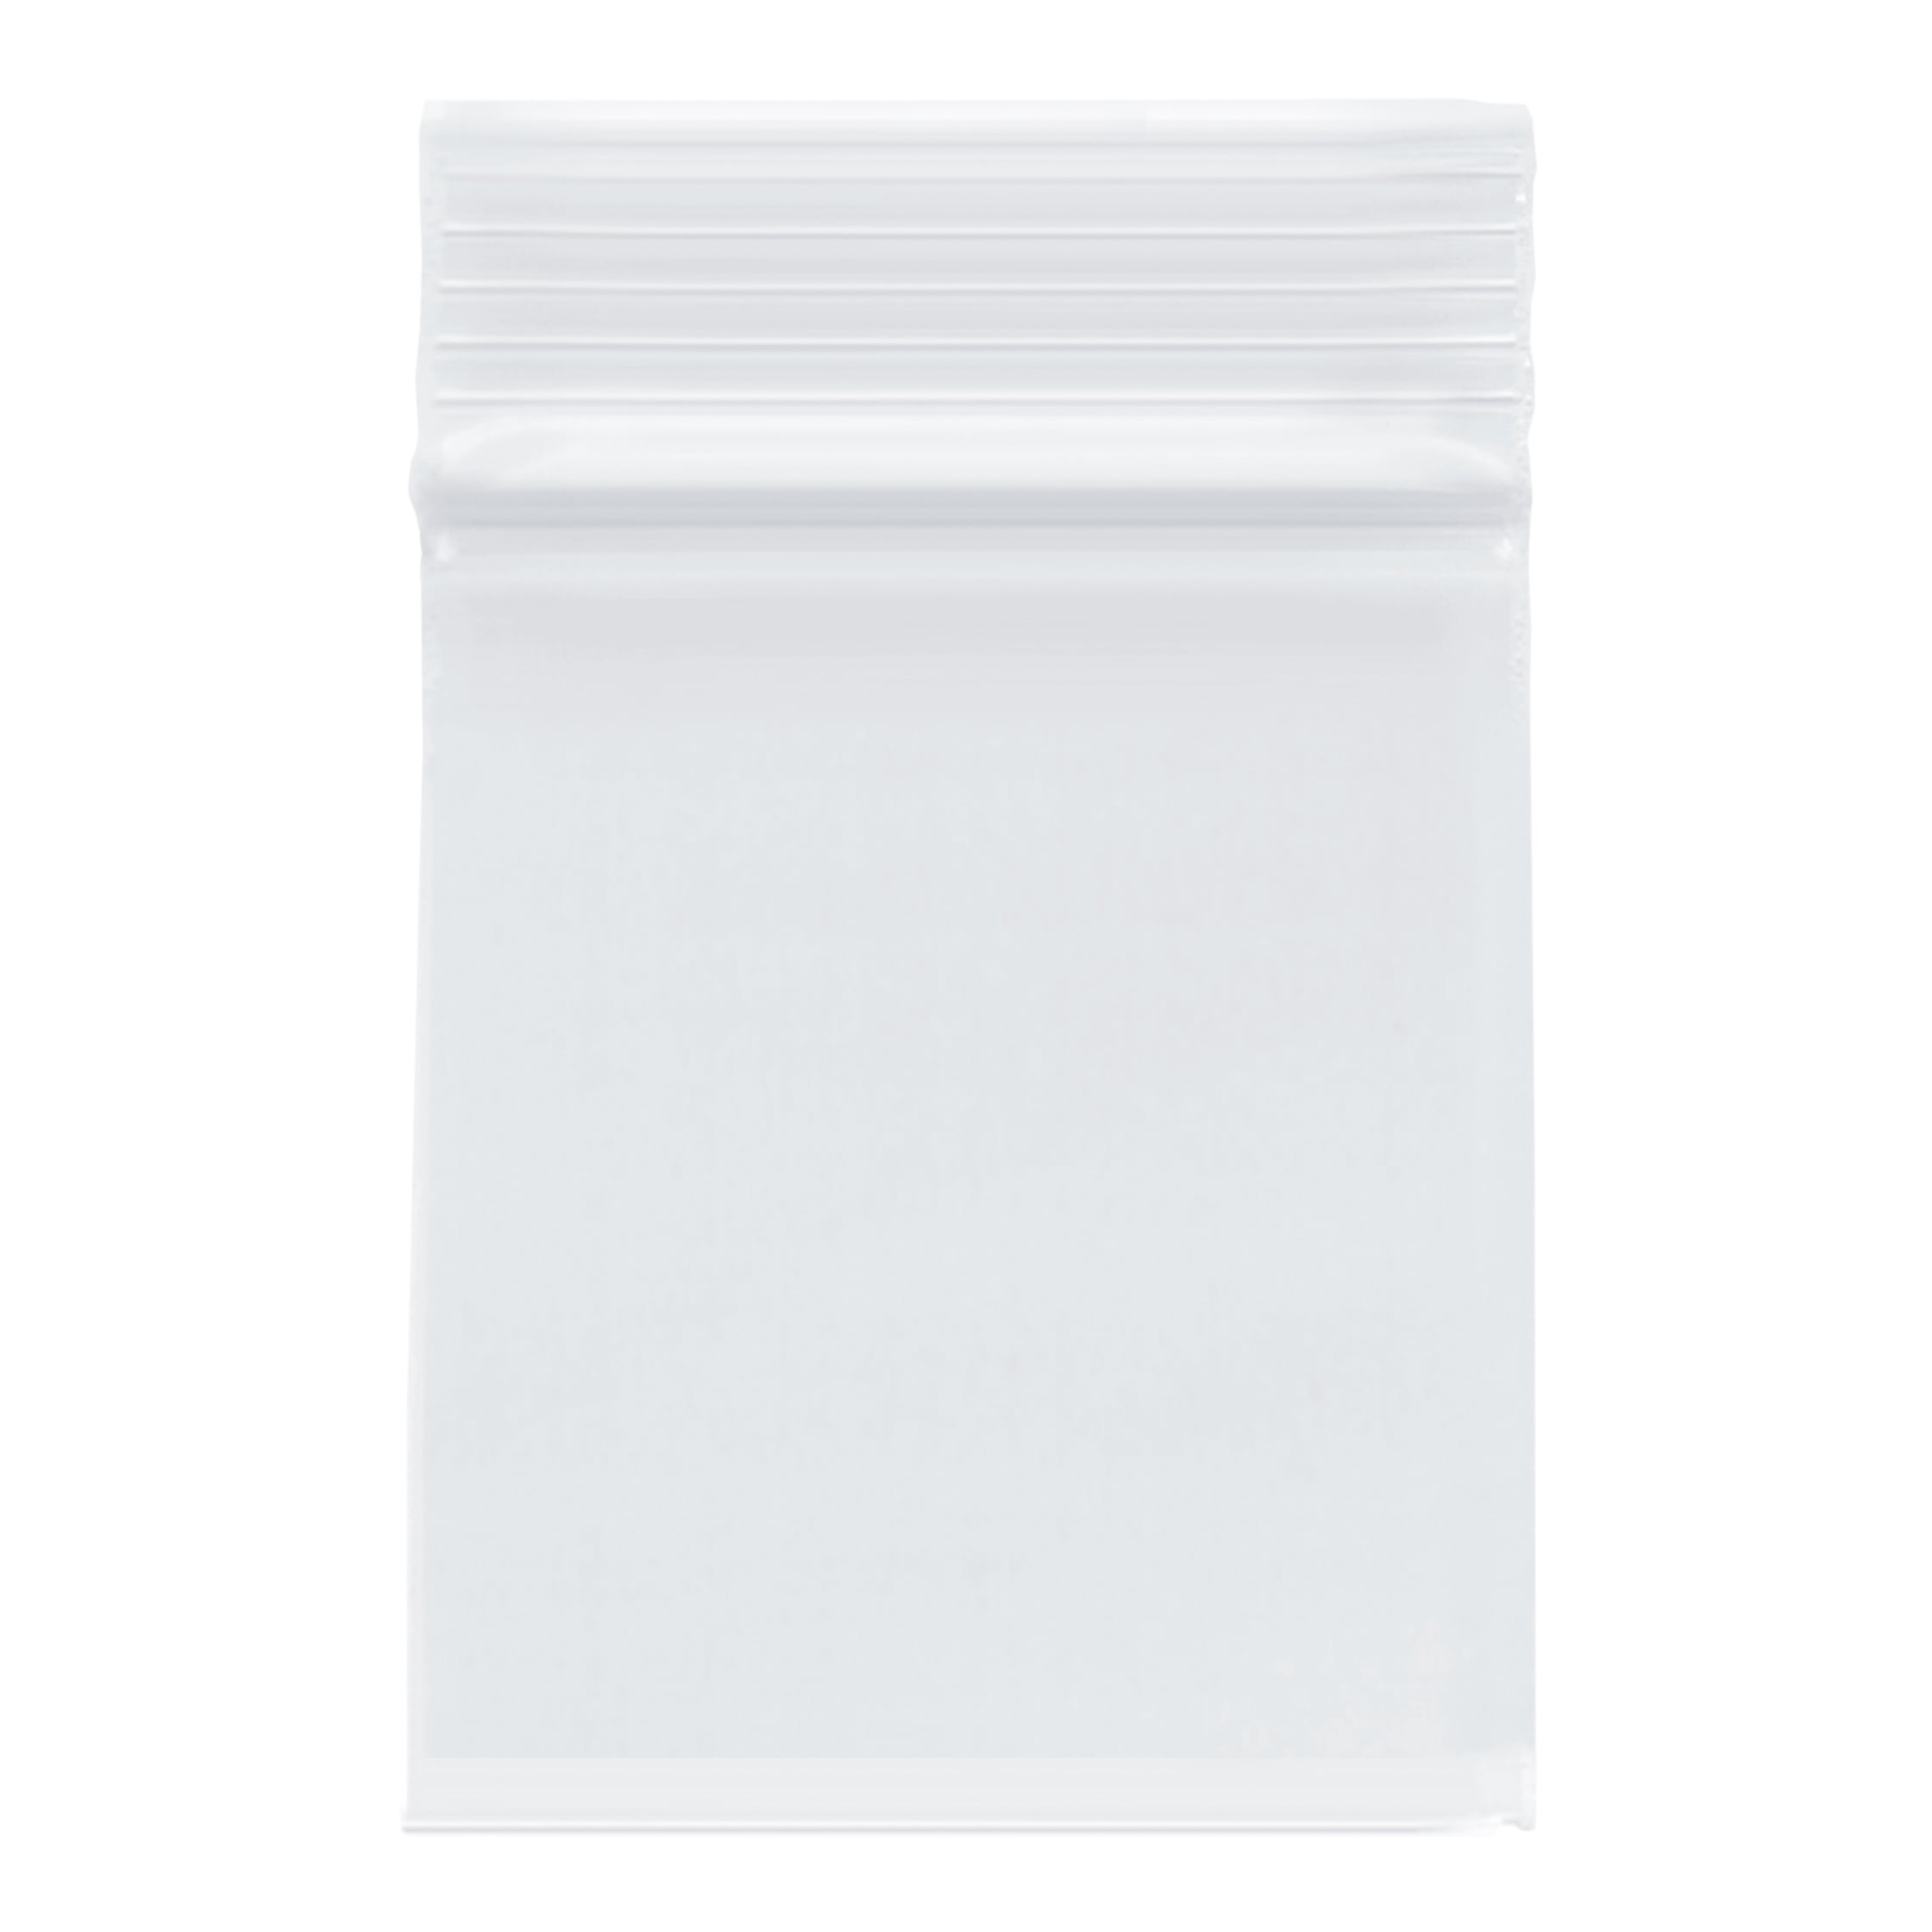 2 x 3 Plymor Heavy Duty Plastic Reclosable Zipper Bags w/ White Block Case of 1000 4 Mil 